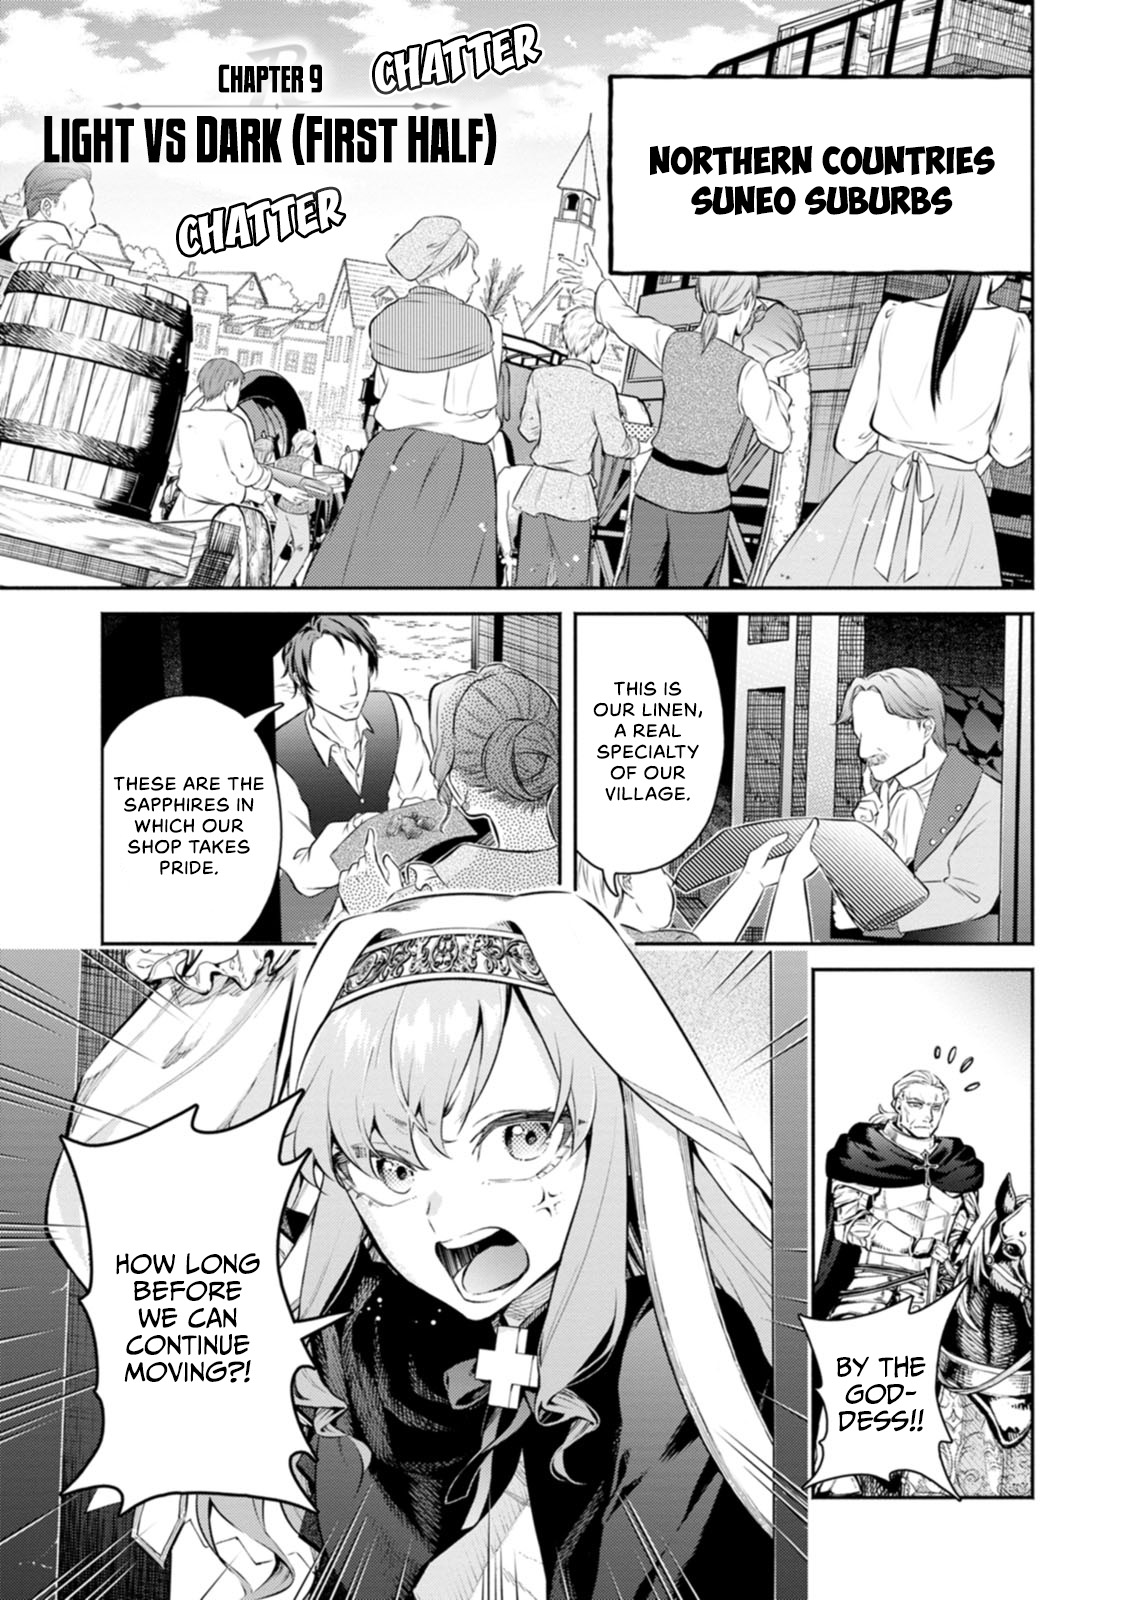 Maou-sama, Retry! R Manga Chapter 29